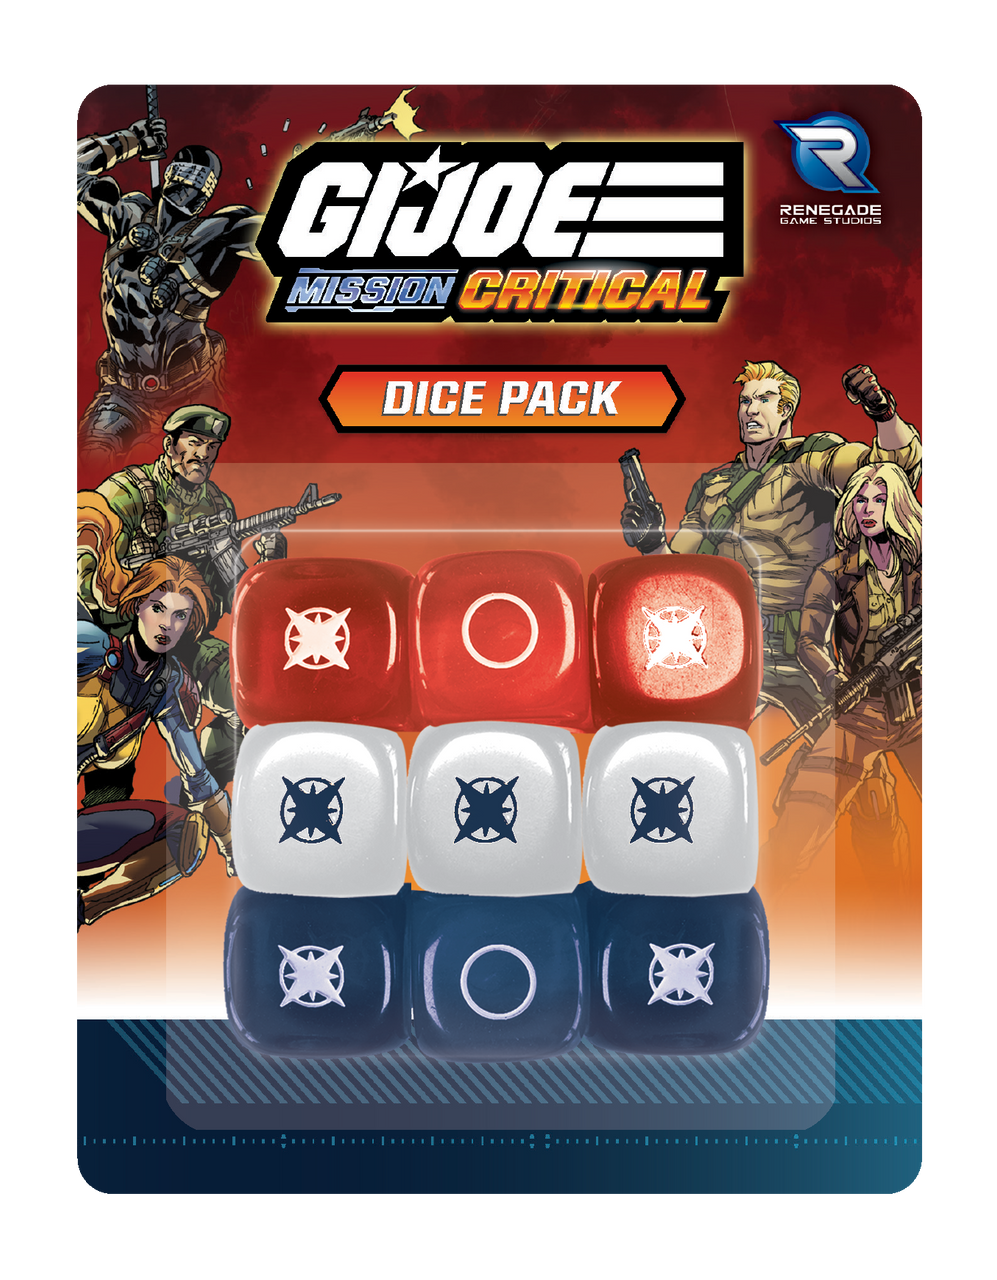 GI Joe Mission Critical Dice Pack